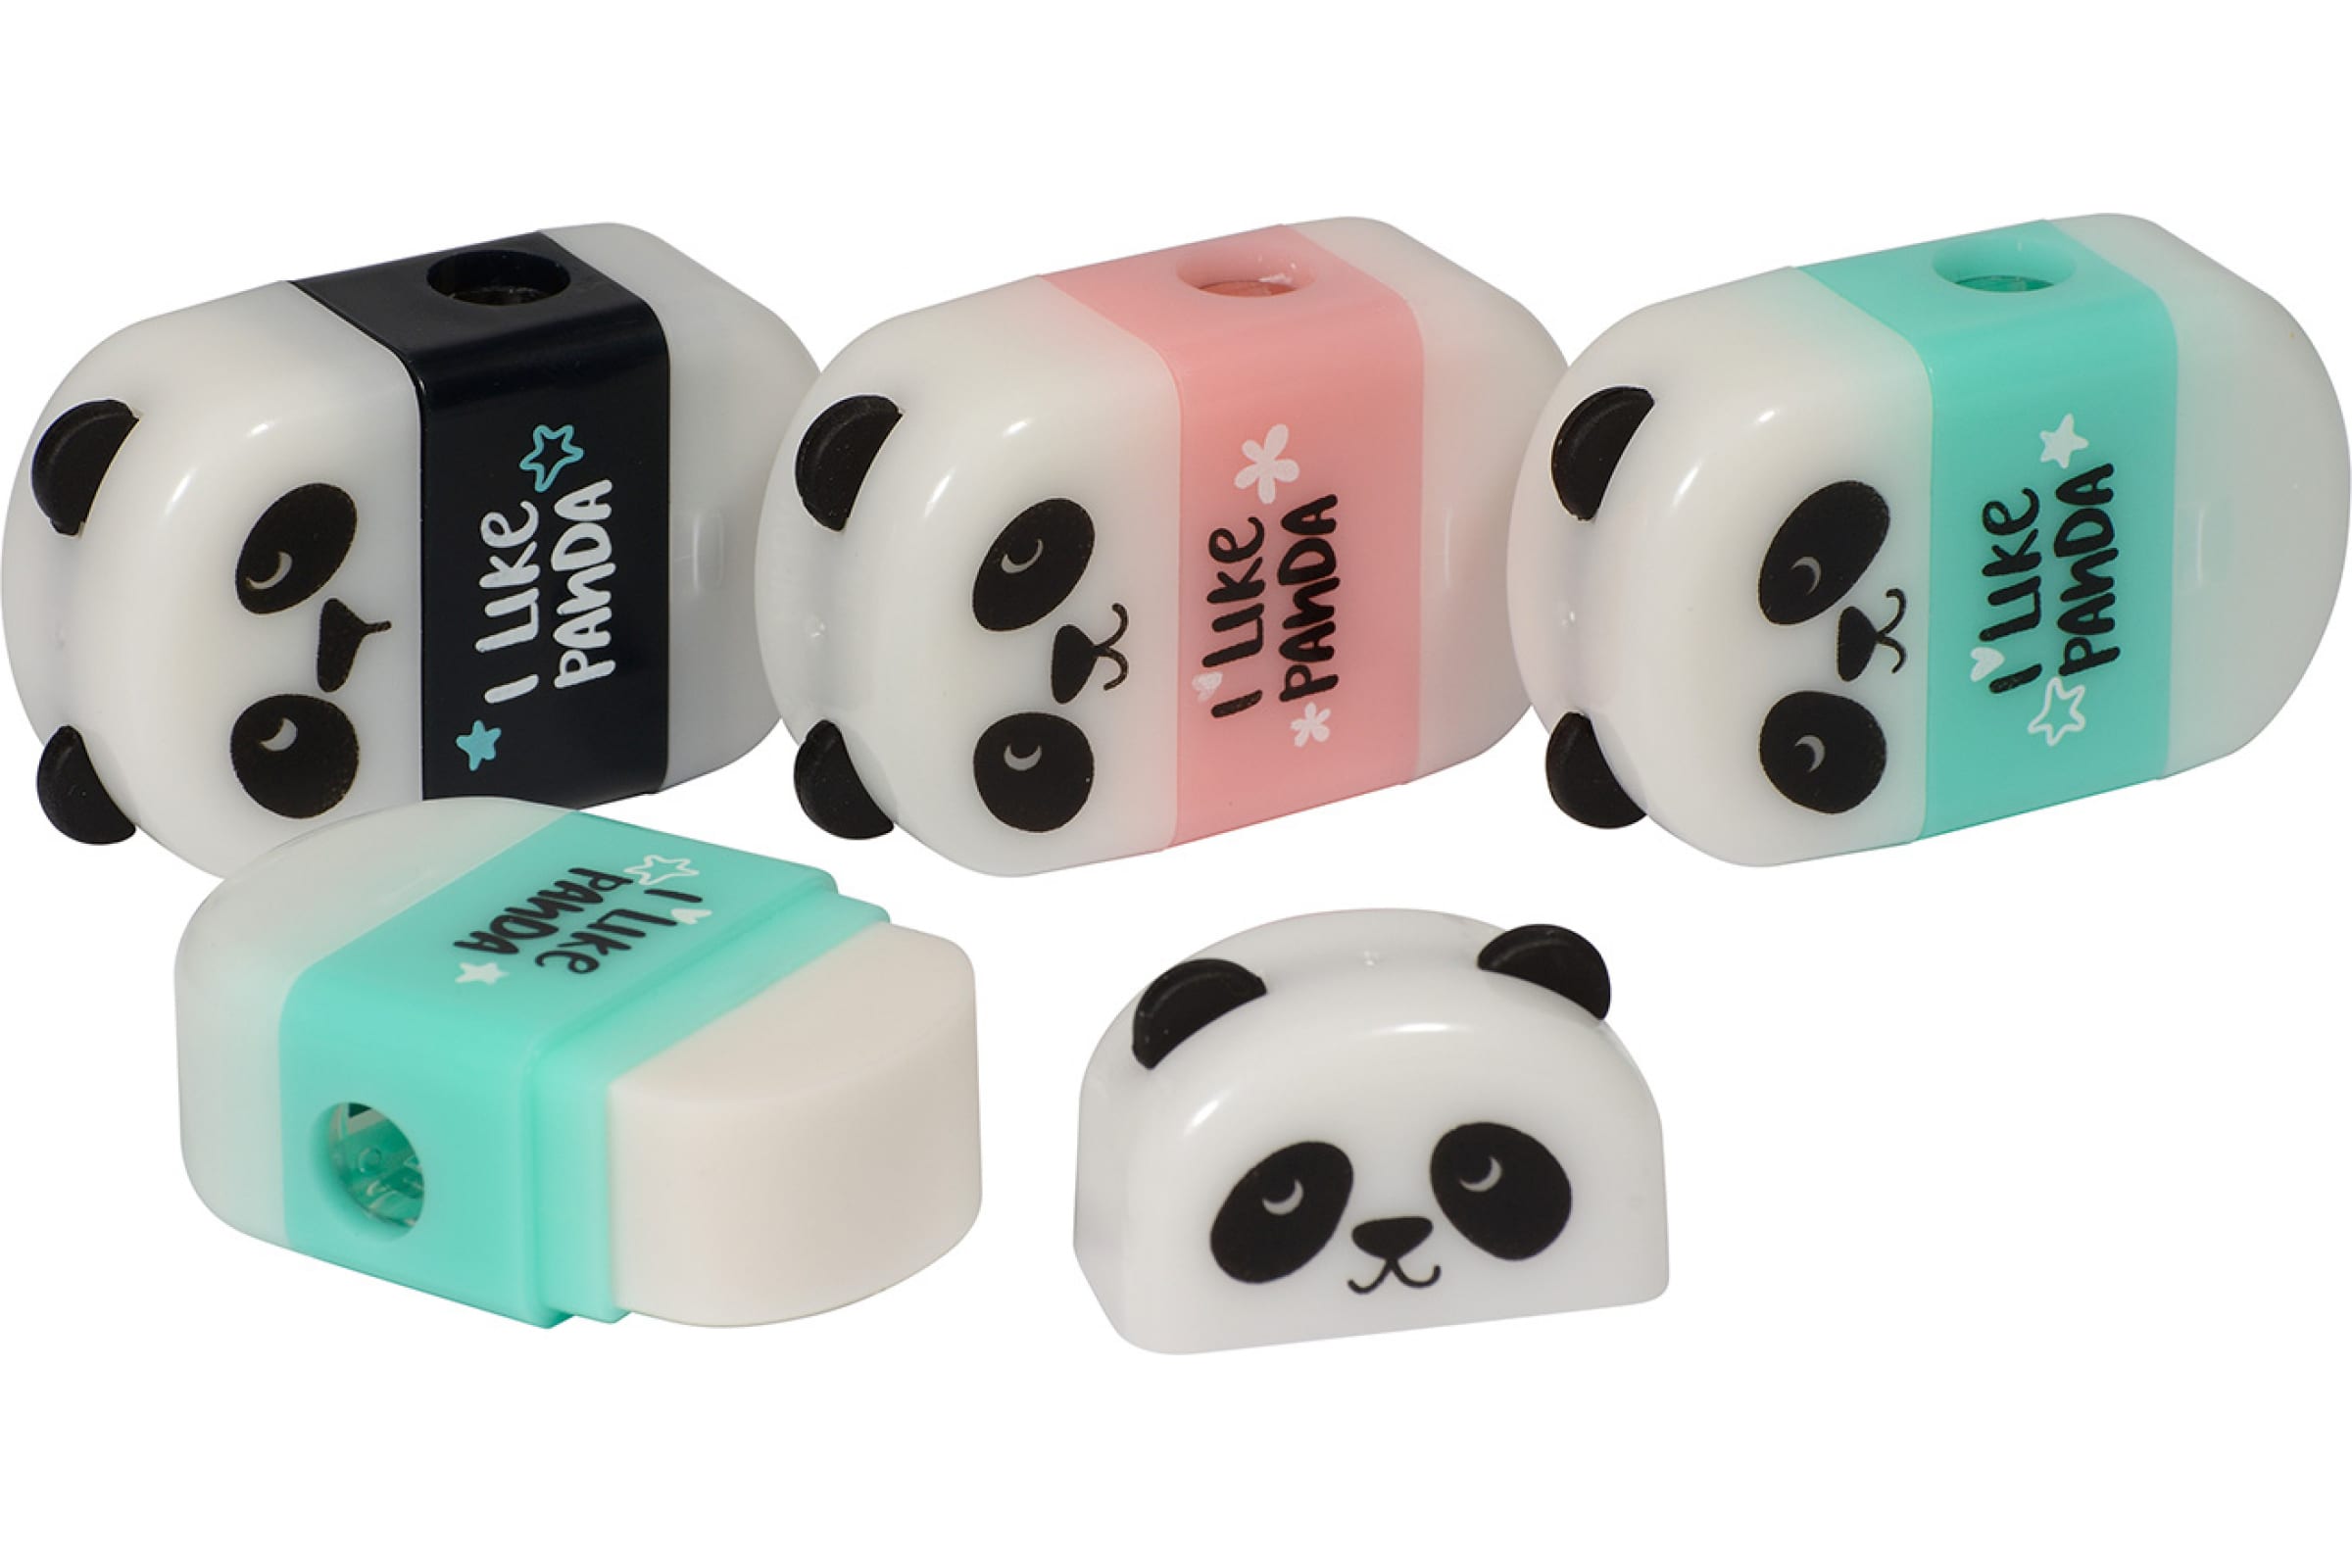 фото Точилка с контейнером и ластиком "fungraphix. панда", 3 цвета, арт. 35-0037 цена за 1 шт. brunovisconti